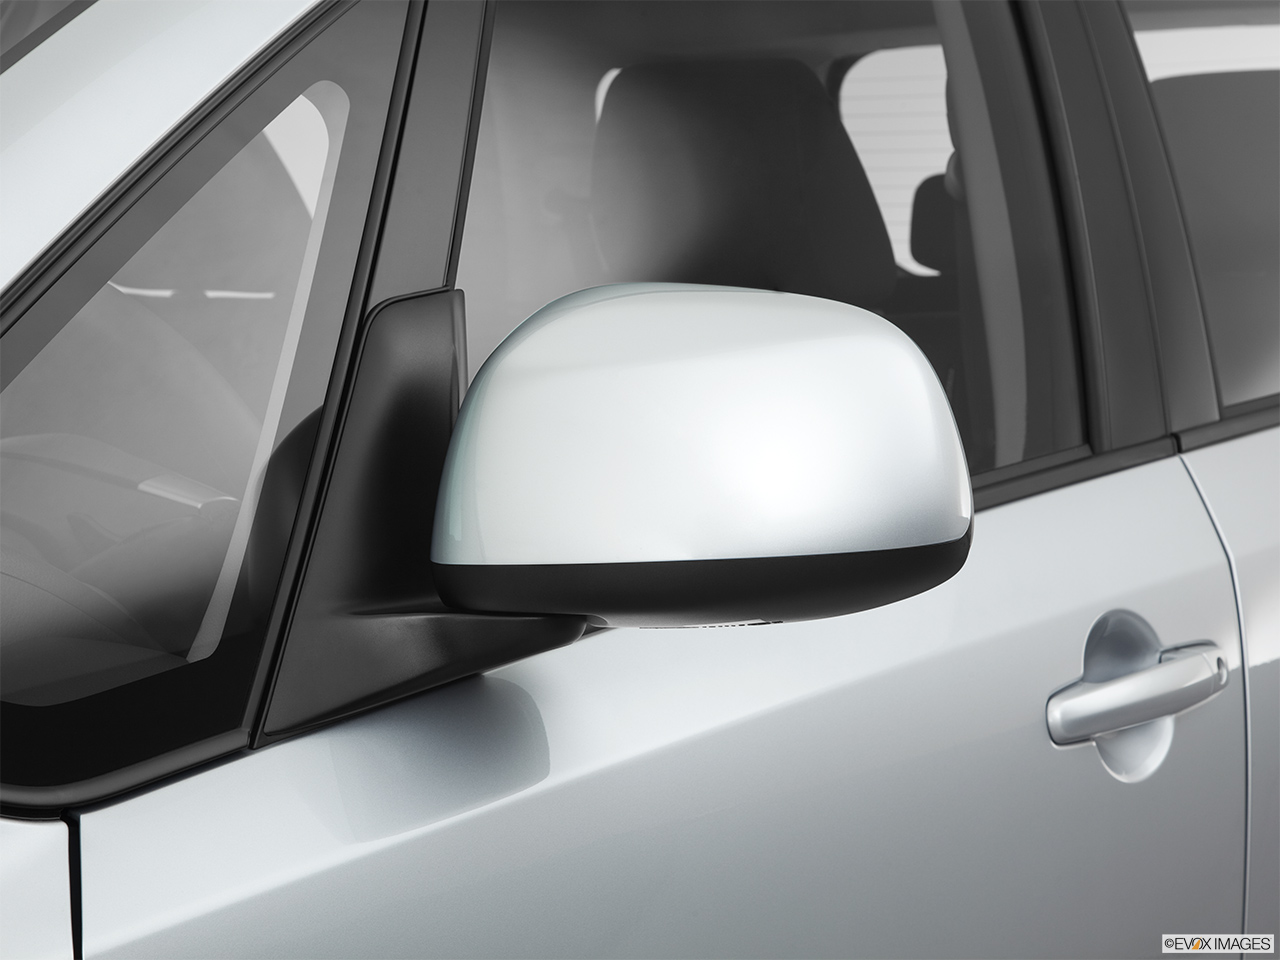 2011 Suzuki SX4 Sportback Technology Driver's side mirror, 3_4 rear 